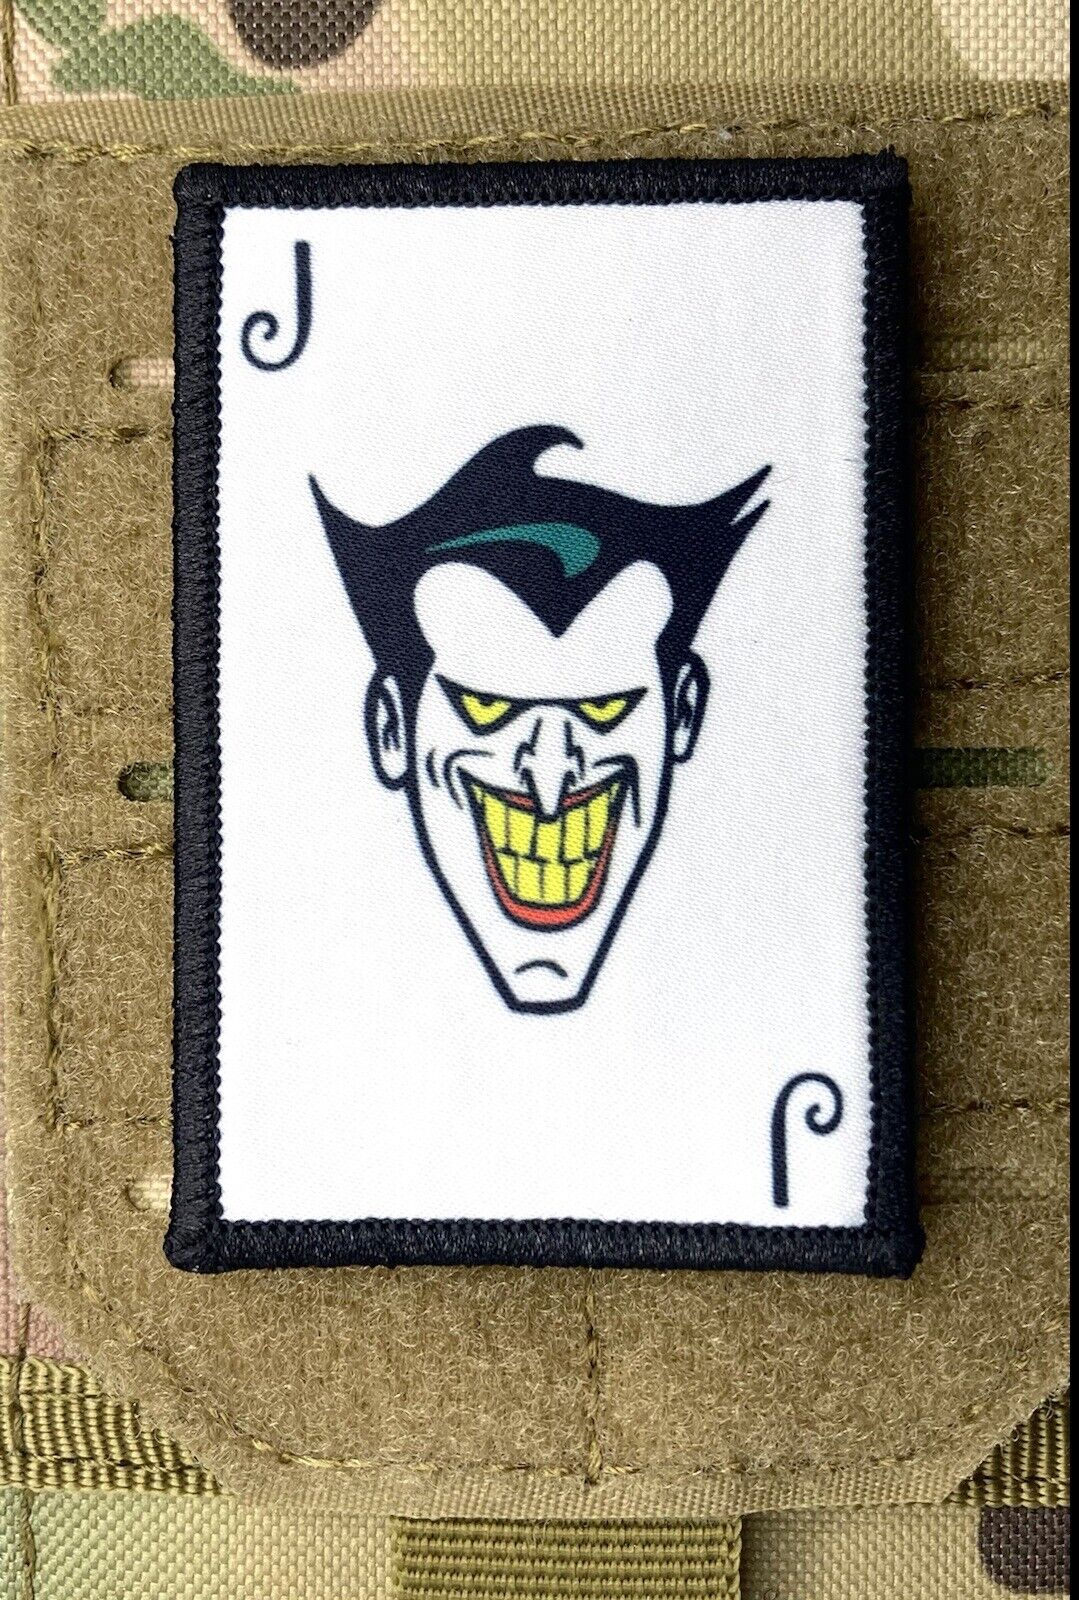 Joker Card Batman Morale Patch / Military Badge ARMY Tactical Hook & Loop 65